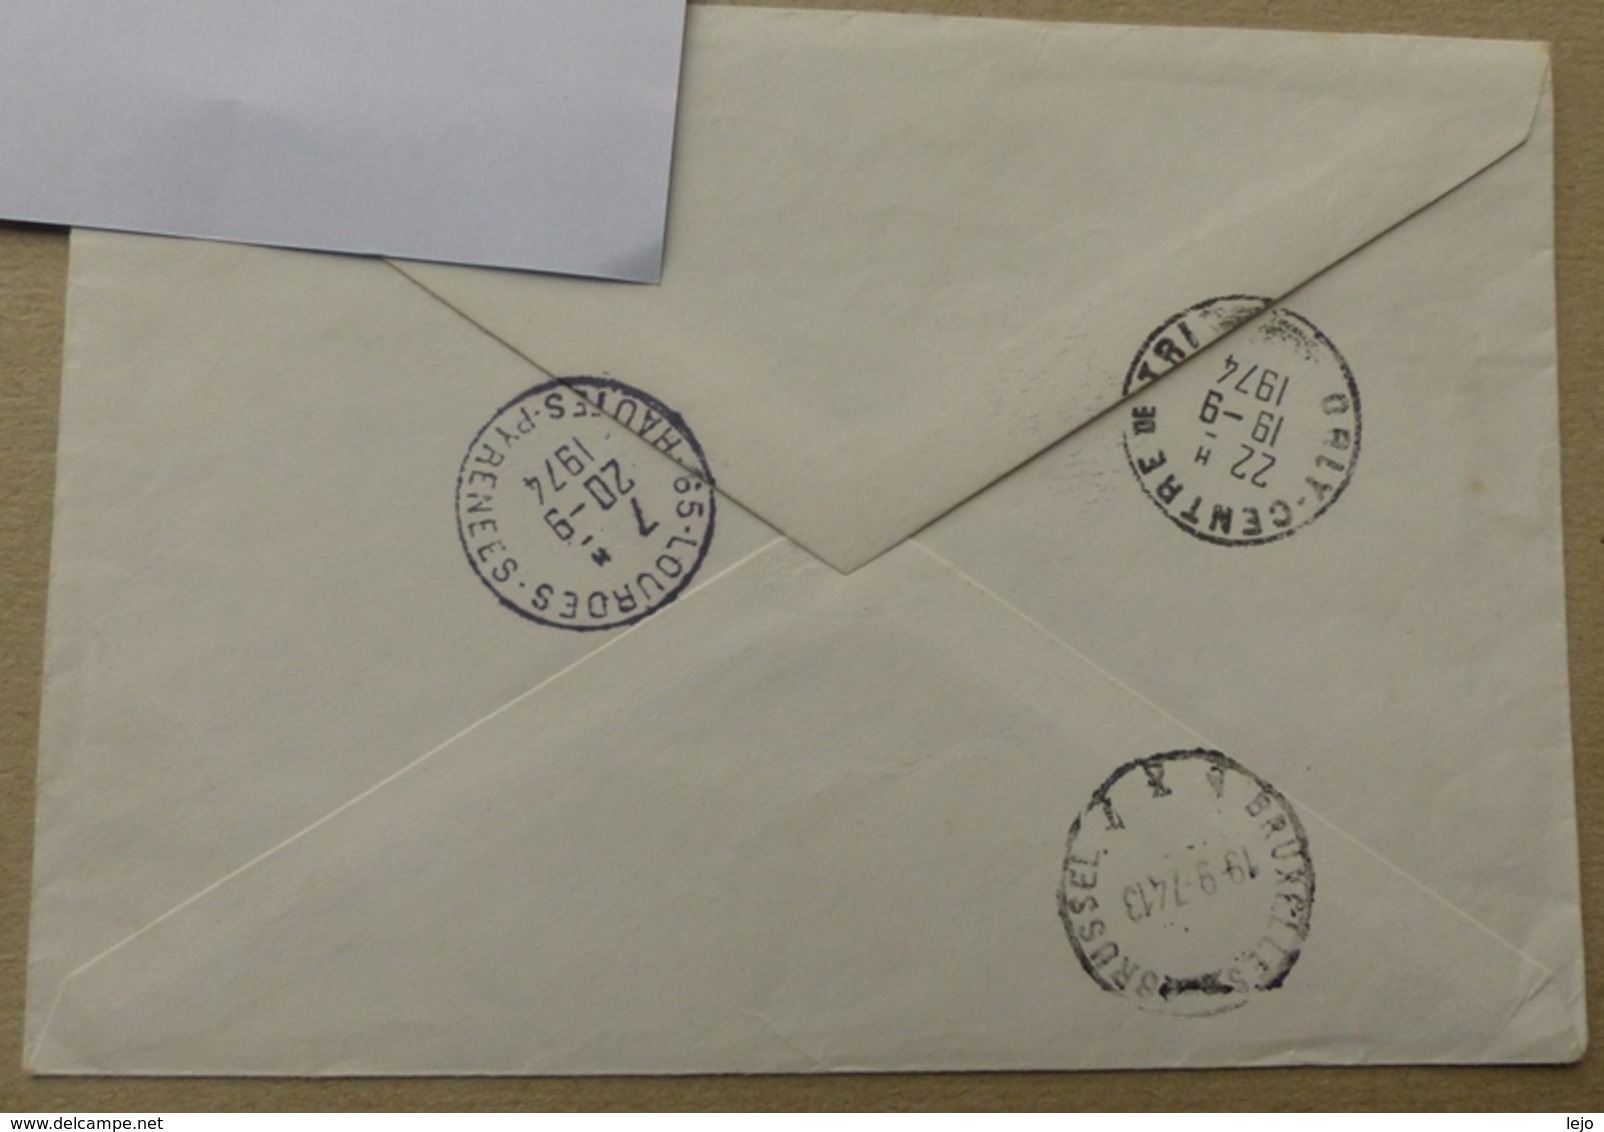 Brief Spoedbestelling - Express - Enveloppes-lettres